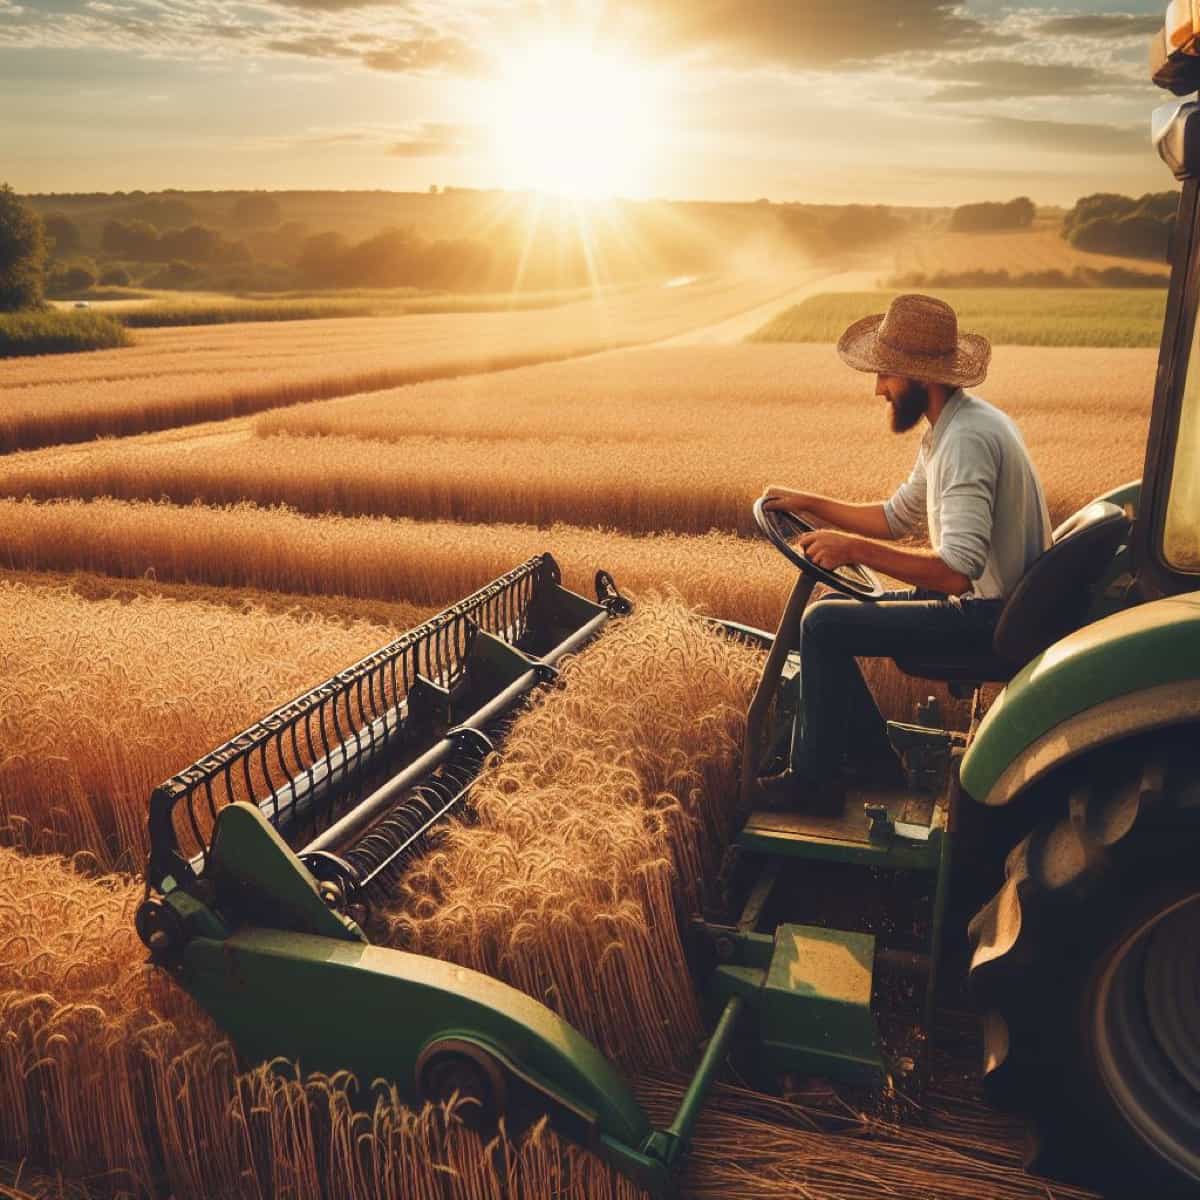 Harvesting in the Farm Concept